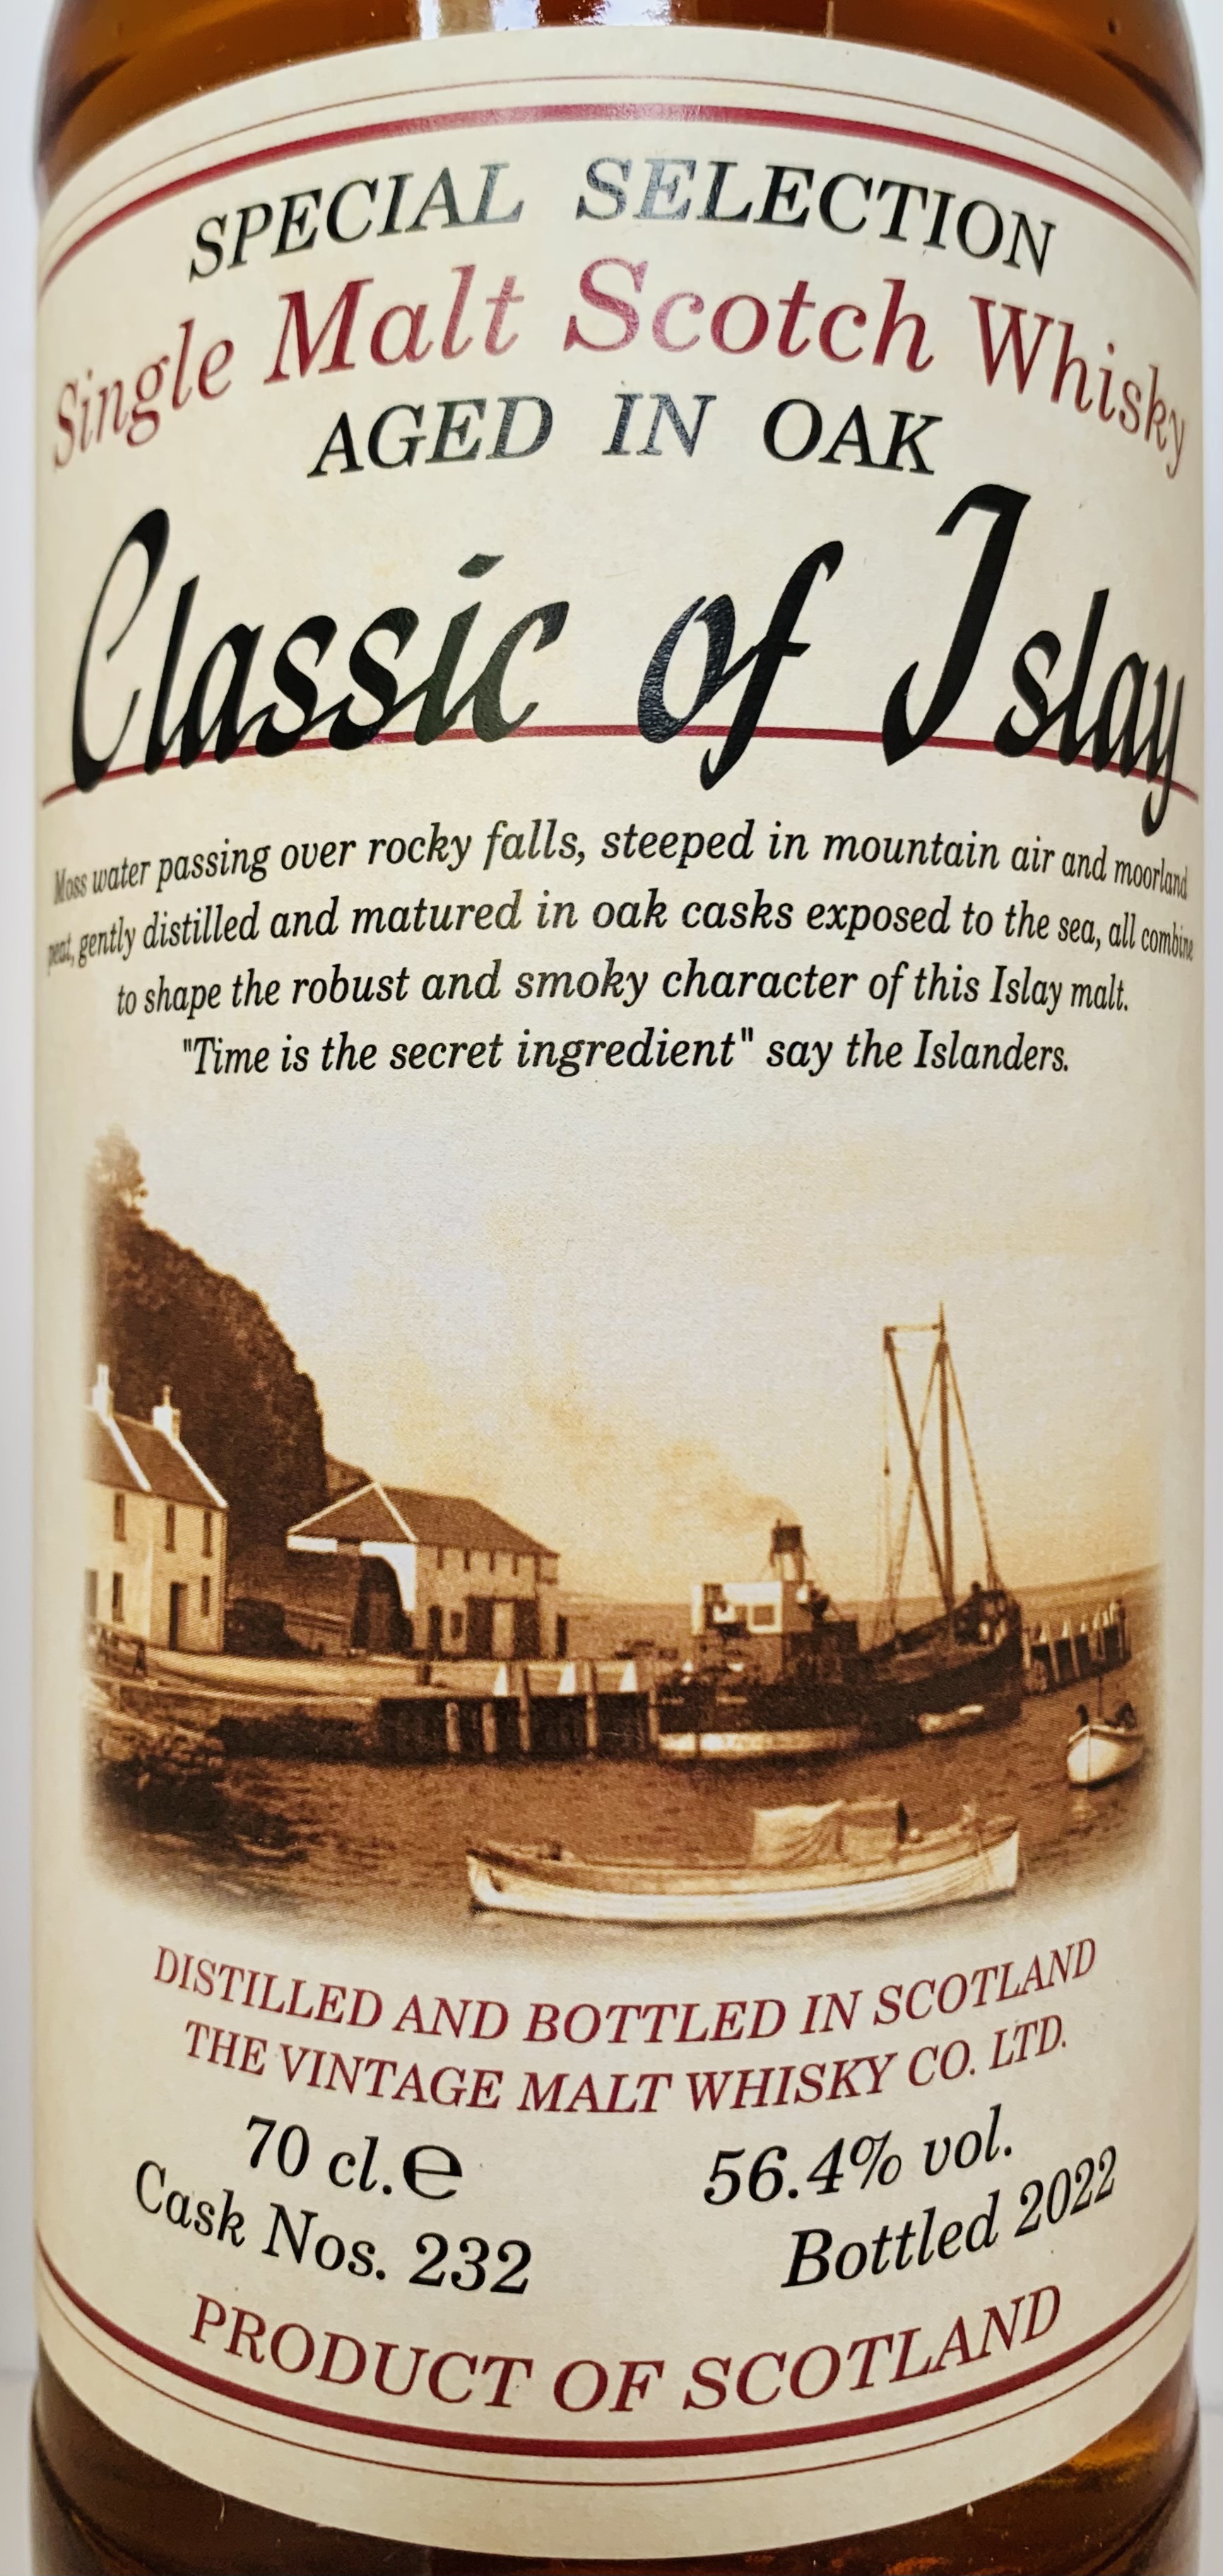 Classic of Islay Jack Wieber Whisky World